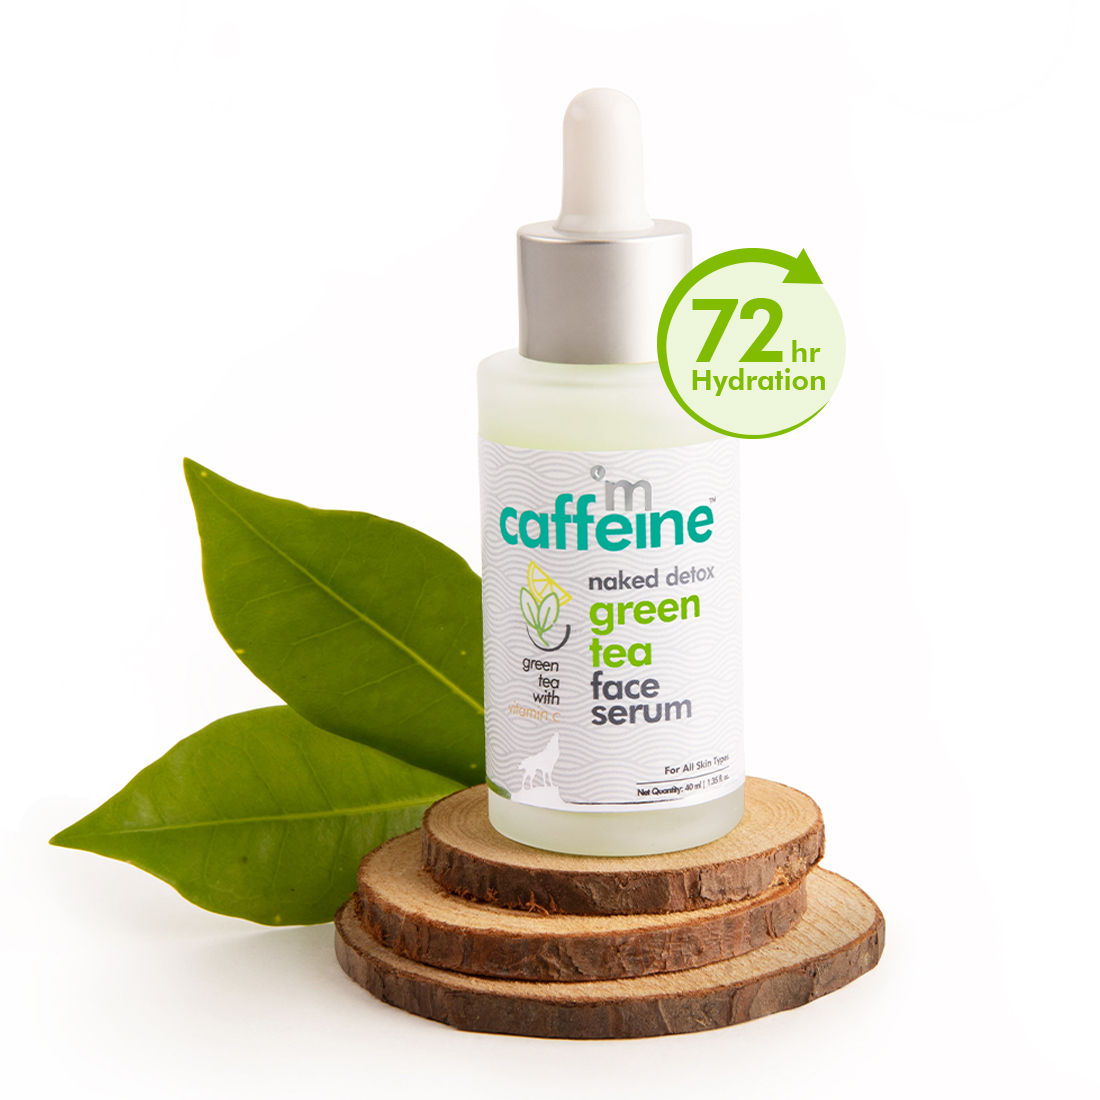 MCaffeine Vitamin C Green Tea Face Serum for Glowing Skin with Hyaluronic Acid - Reduces Dark Spots